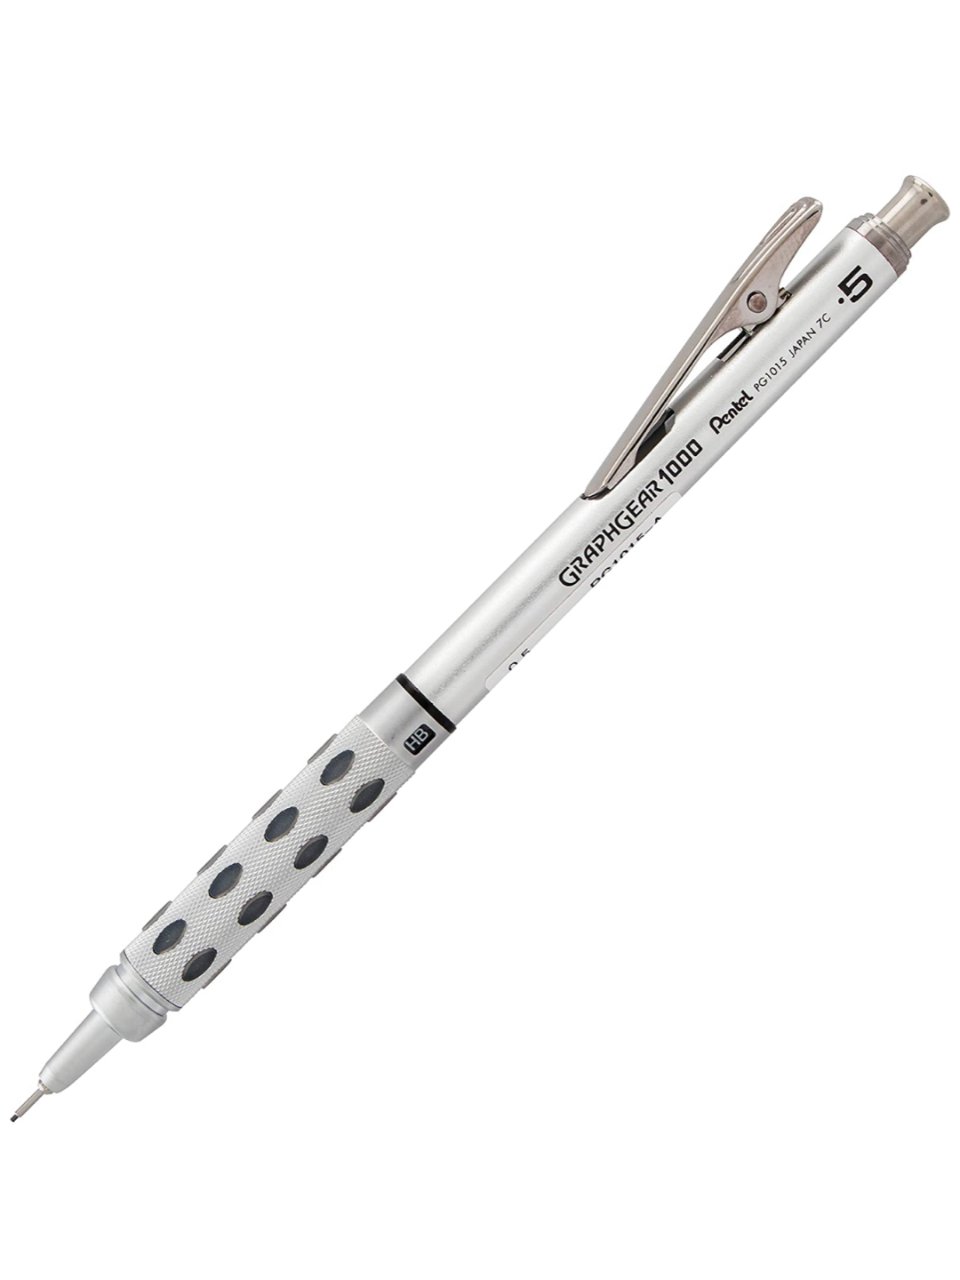 pentel 派通,Pentel GraphGear 1000 Mechanical Pencil, (0.5mm), Black Barrel, 1 Each (PG1015A), Metallic Grey: Office Products